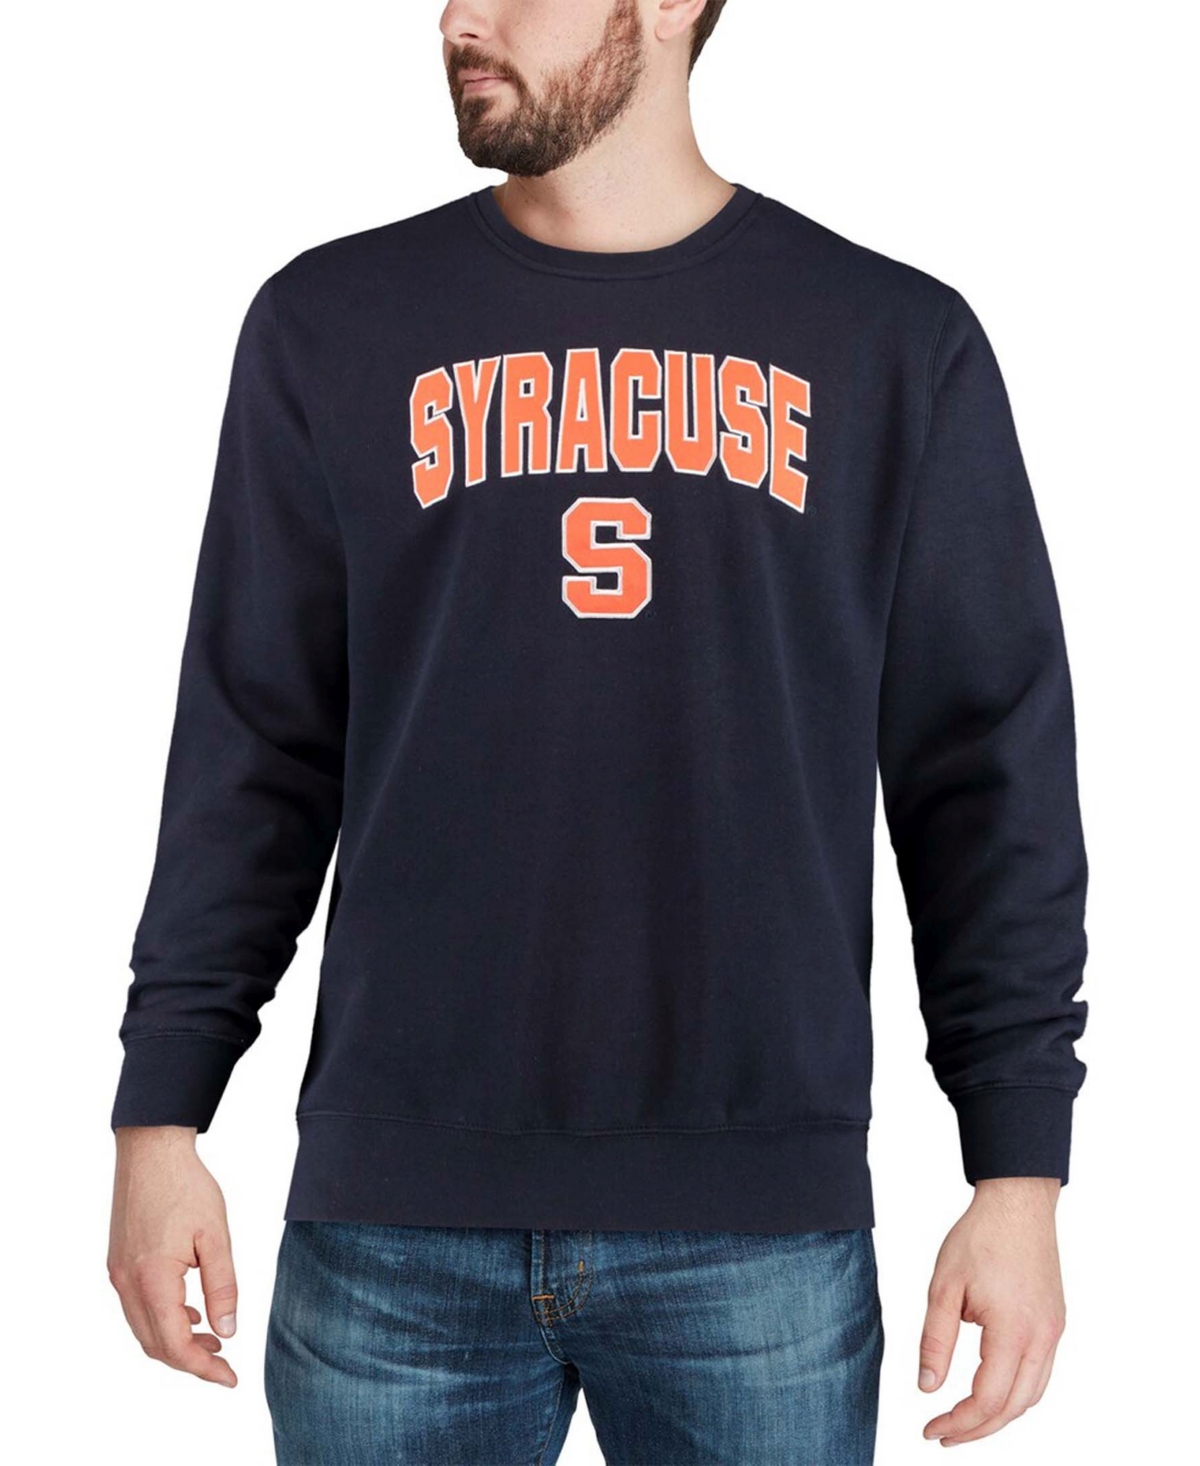 Shop Colosseum Men's Navy Syracuse Orange Arch Logo Crew Neck Sweatshirt